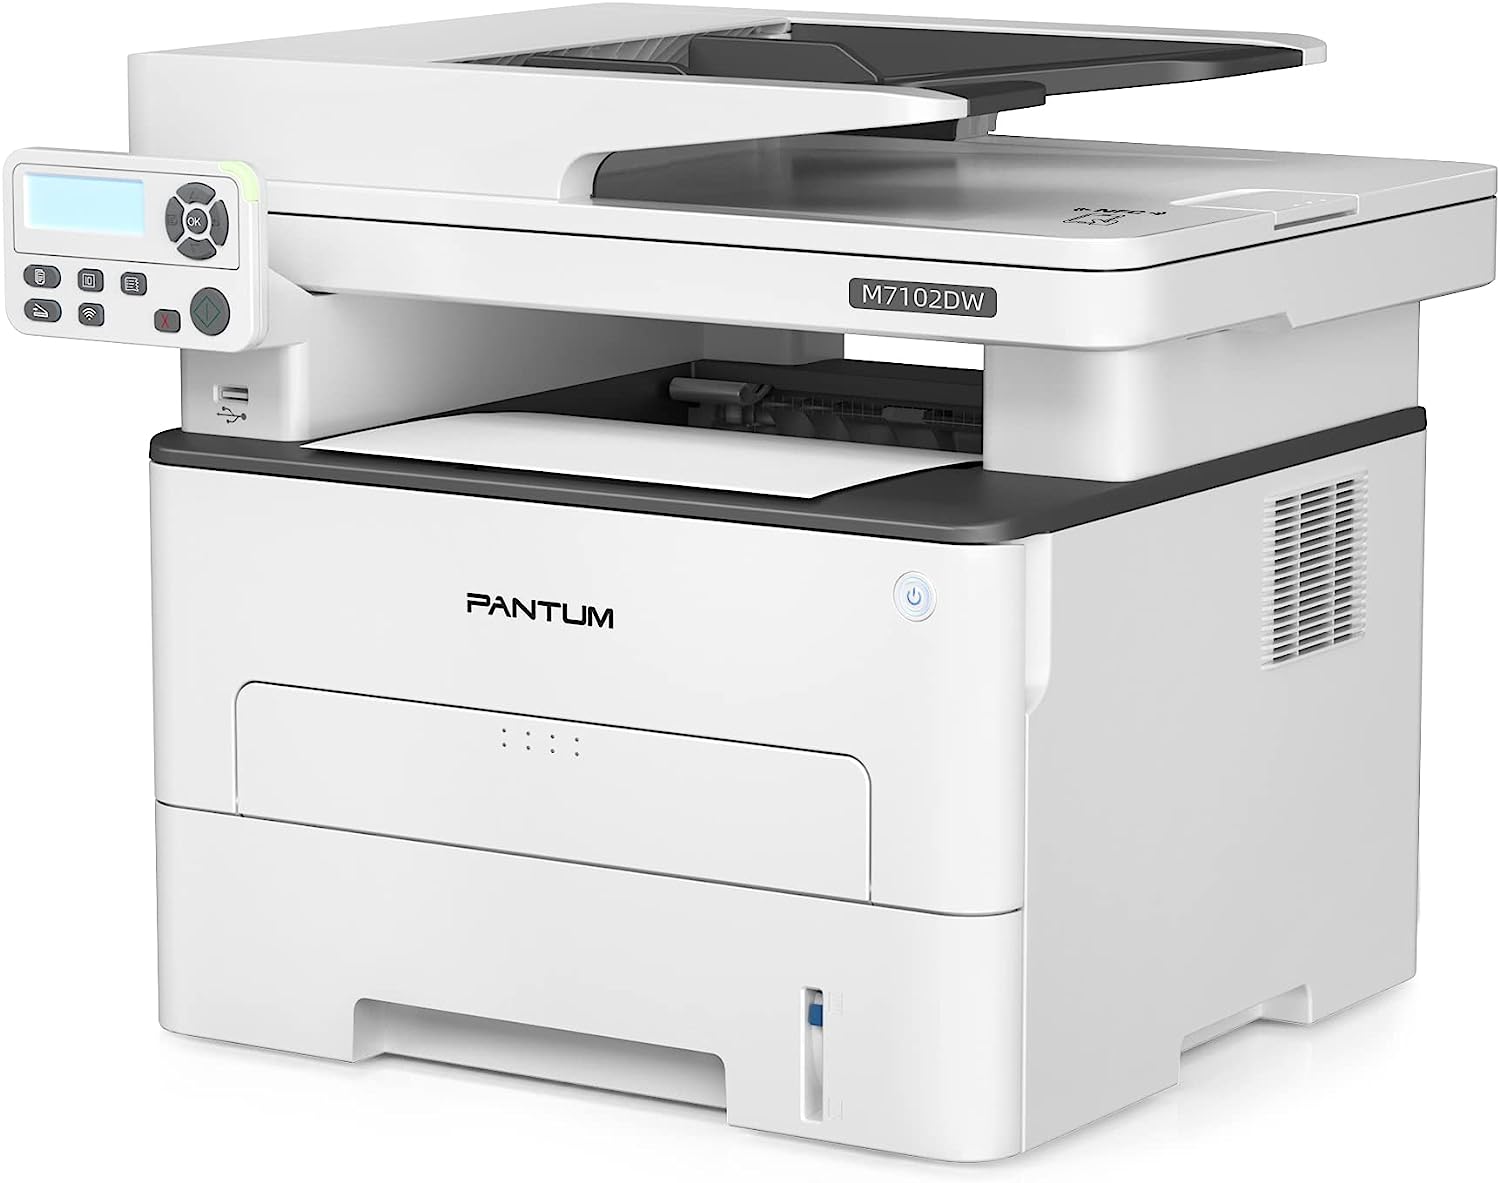 Pantum M7102DW Laser Printer Scanner Copier 3 in 1, [...]